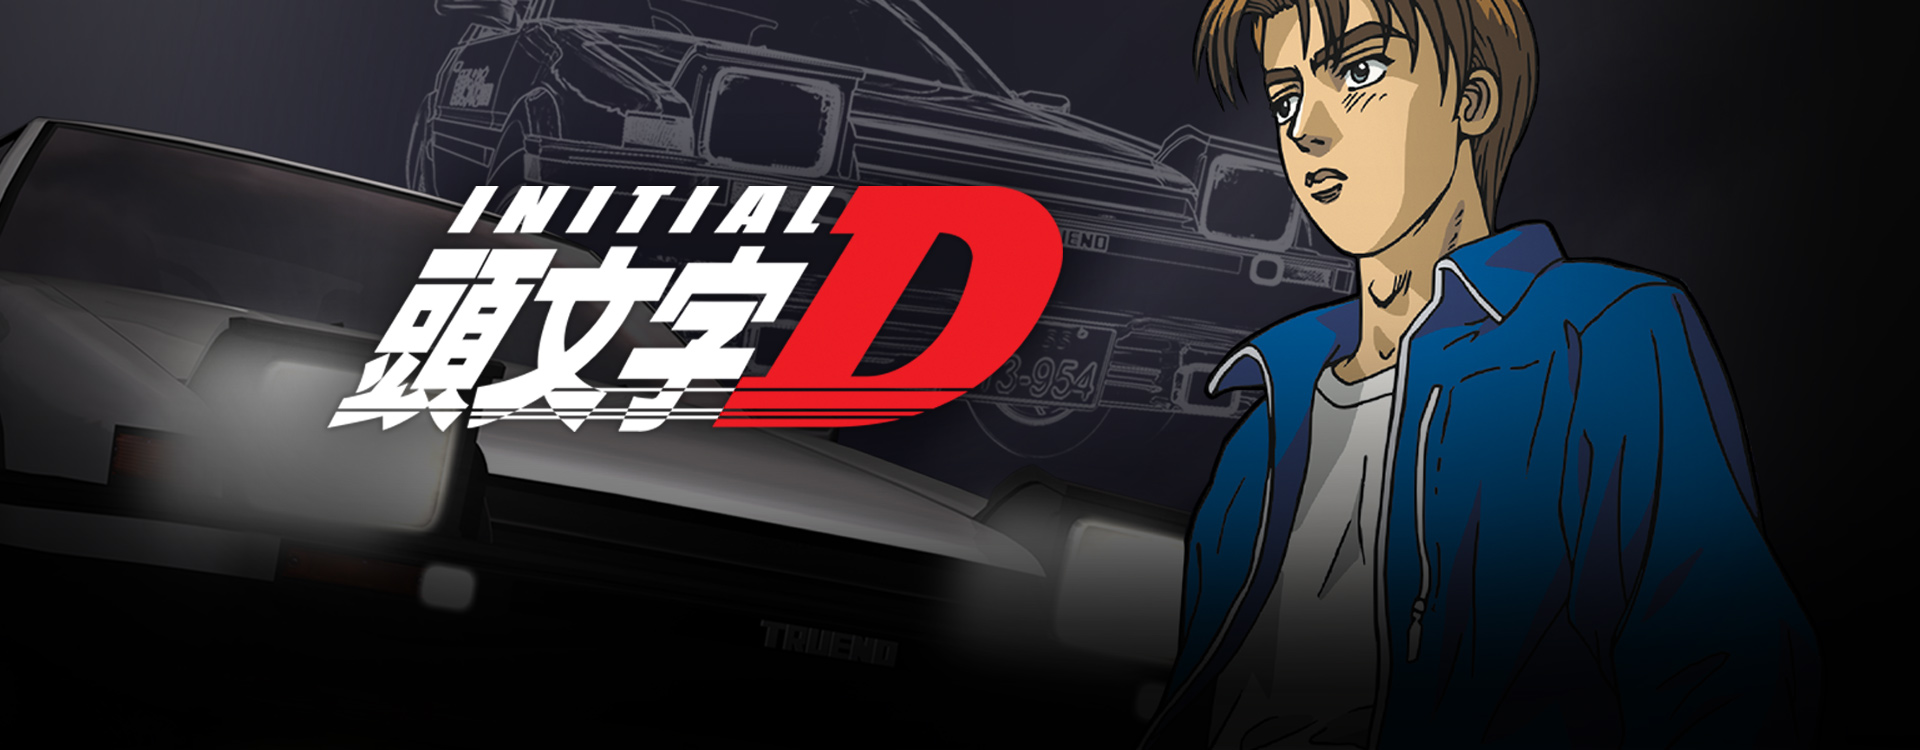 Watch Initial D Sub Dub Action Adventure Shounen Anime Funimation